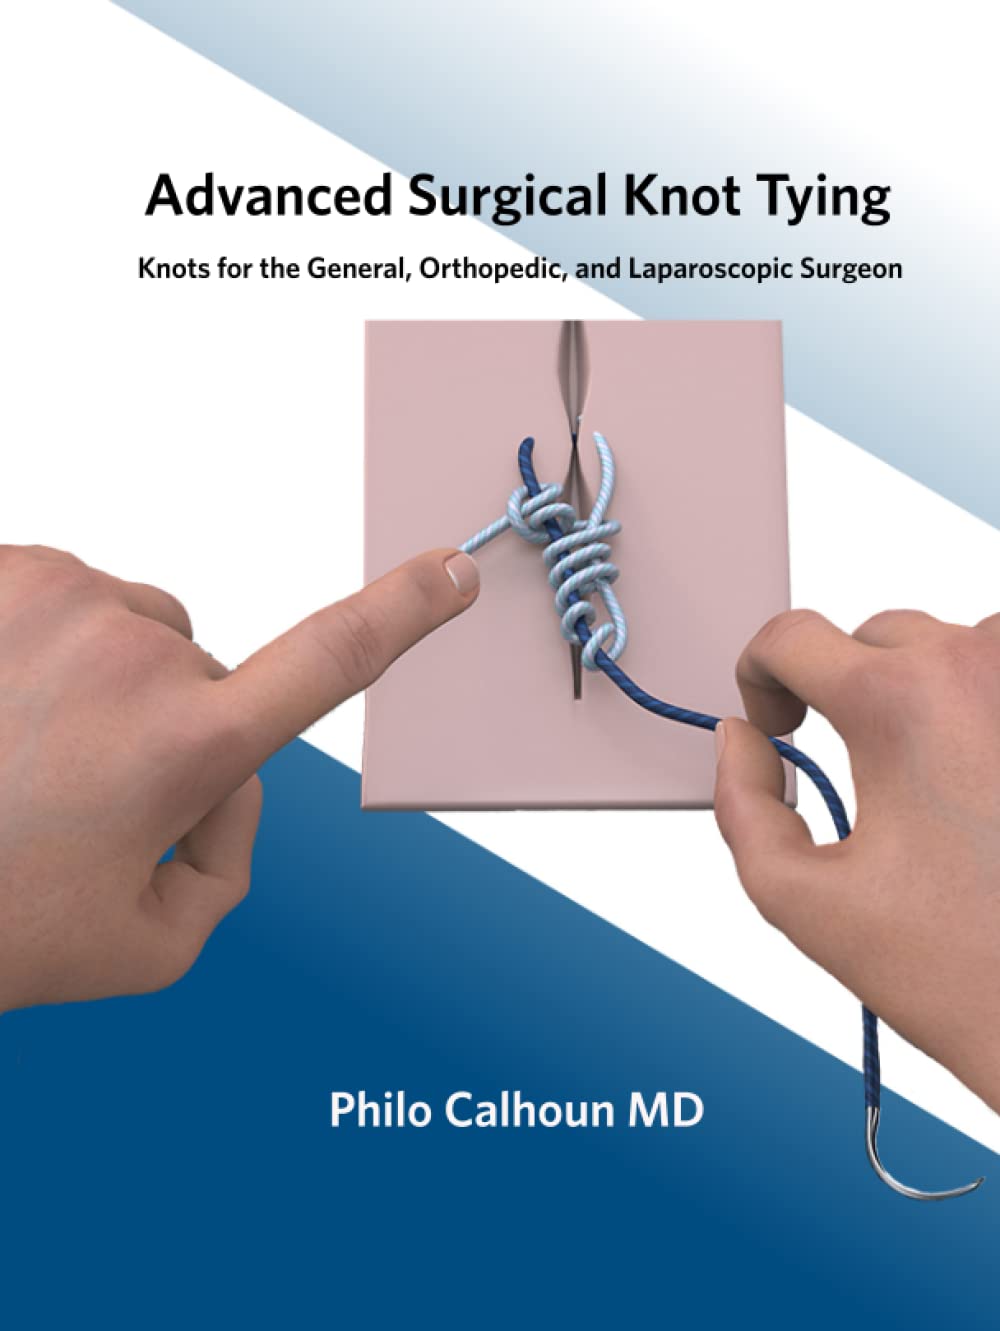 duke website surgical knot tying